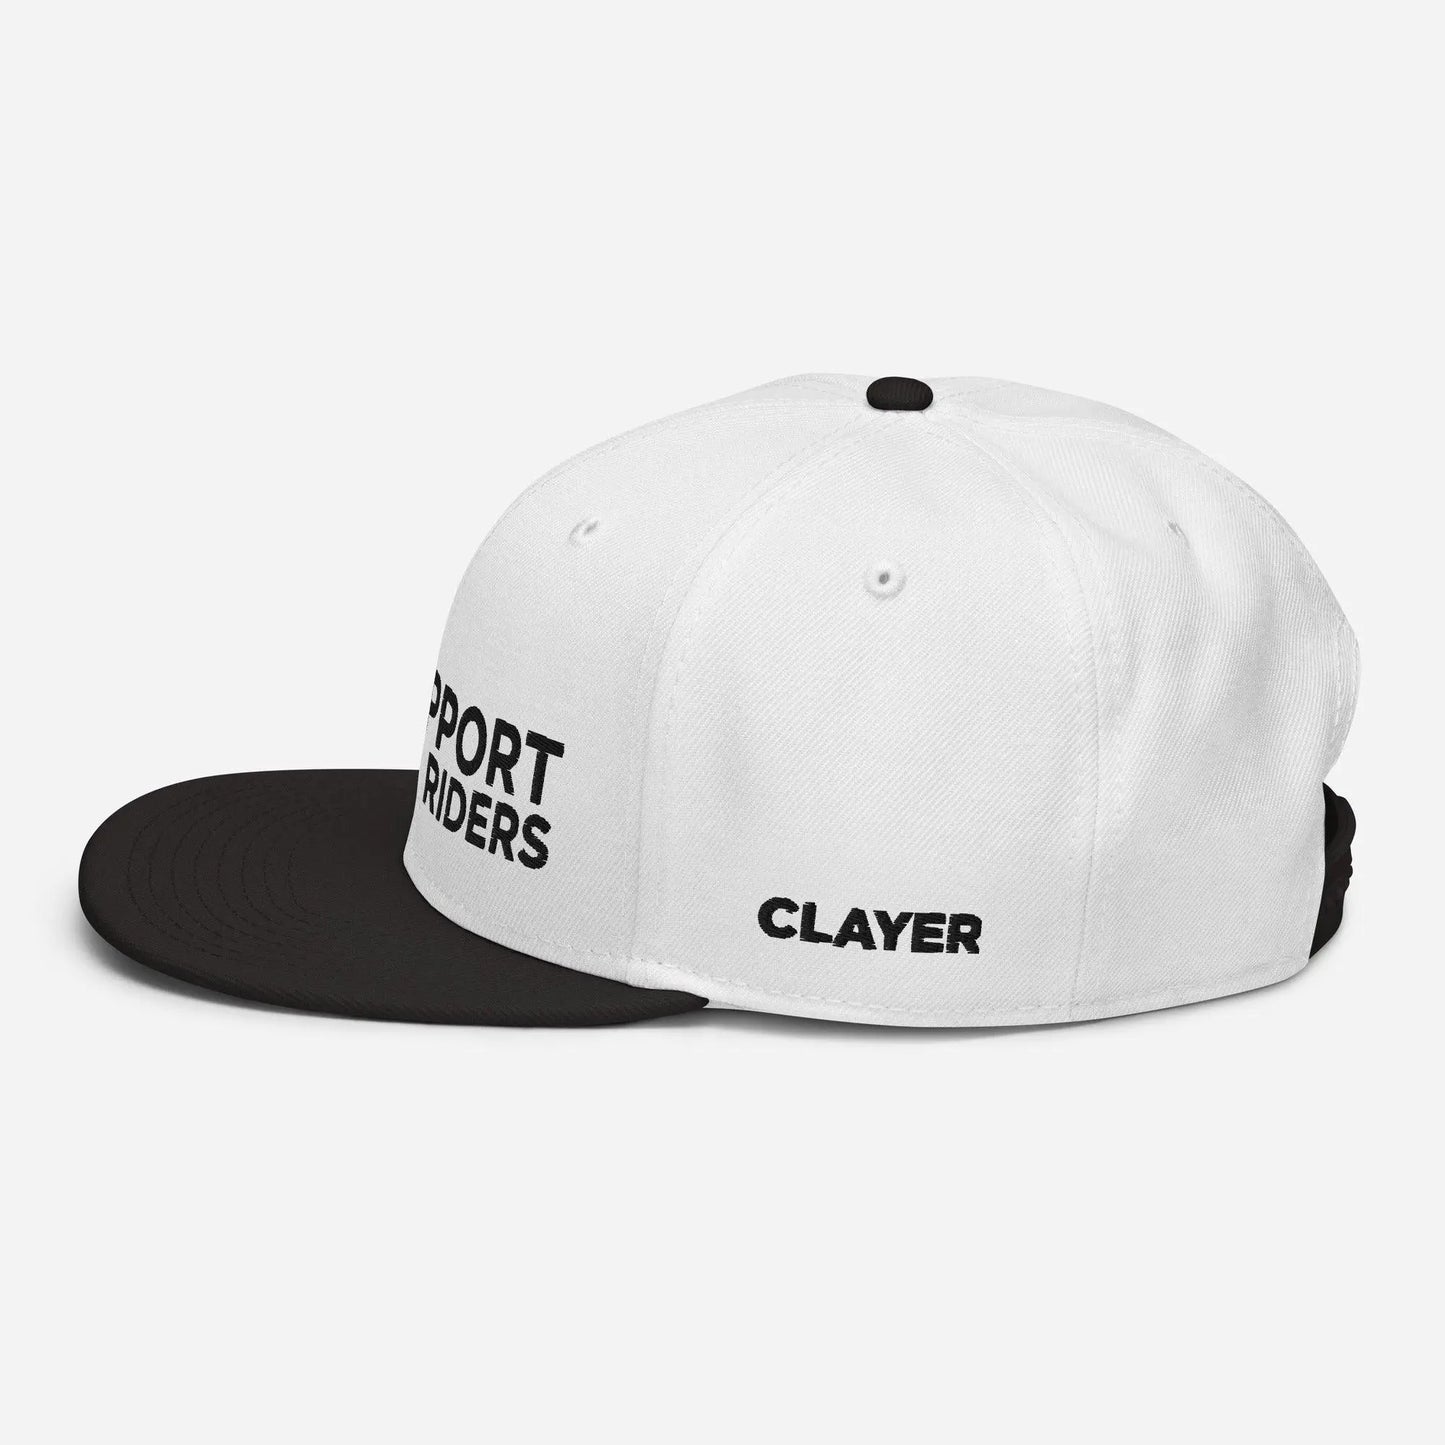 Clayer – Support Riders – Snapback-Mütze – CLAYER